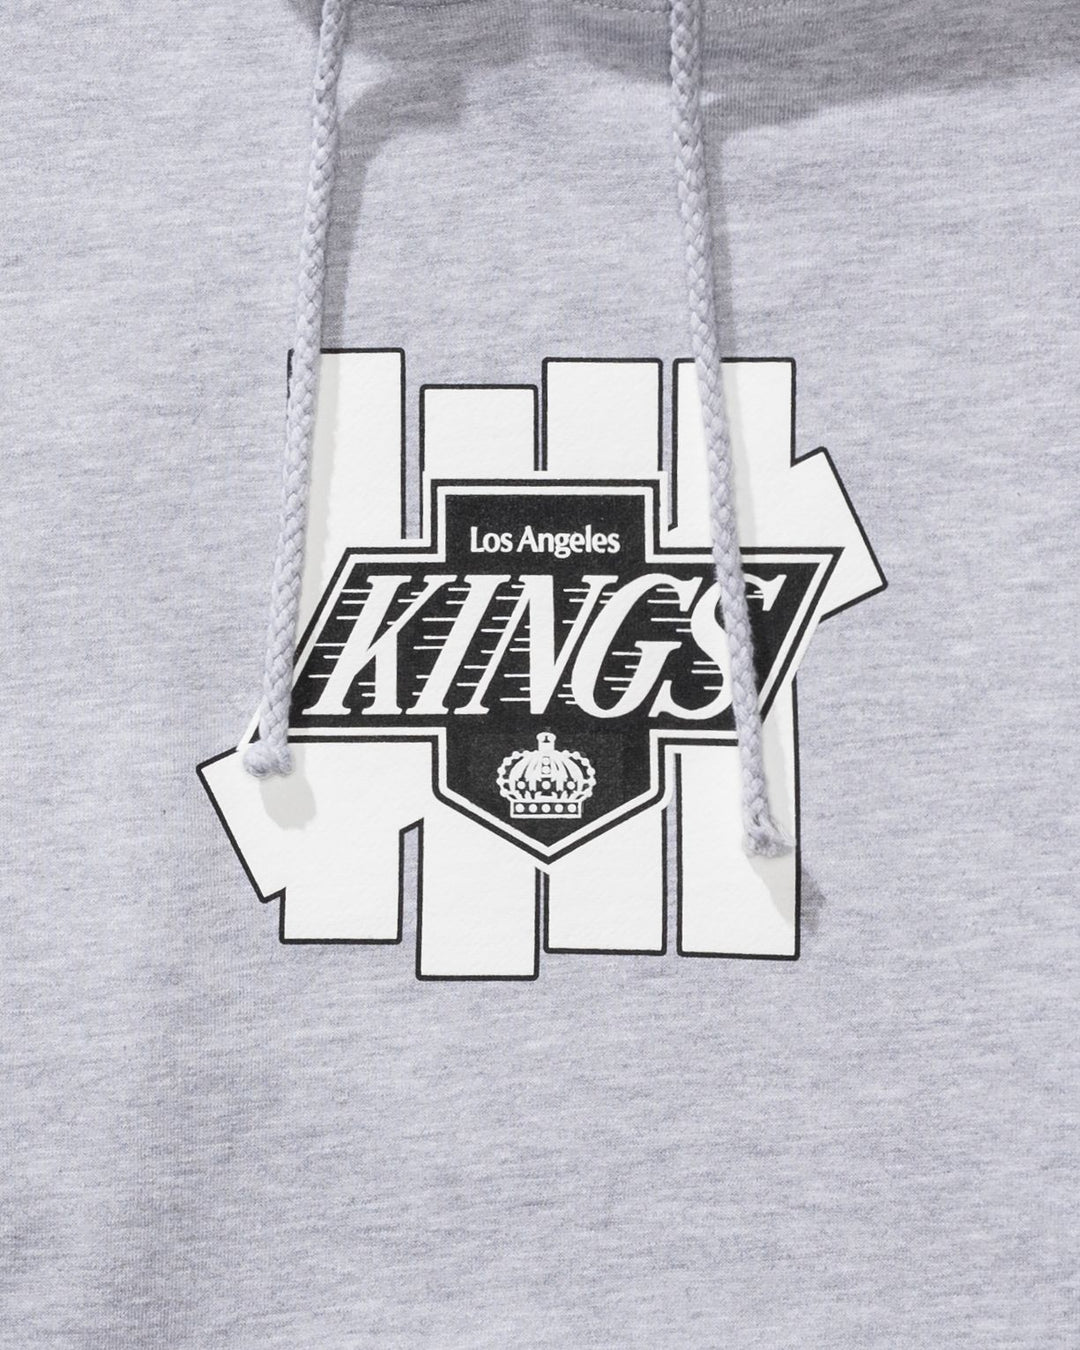 Undefeated x La Kings Chevy Logo Hoodie Medium / Heather Grey